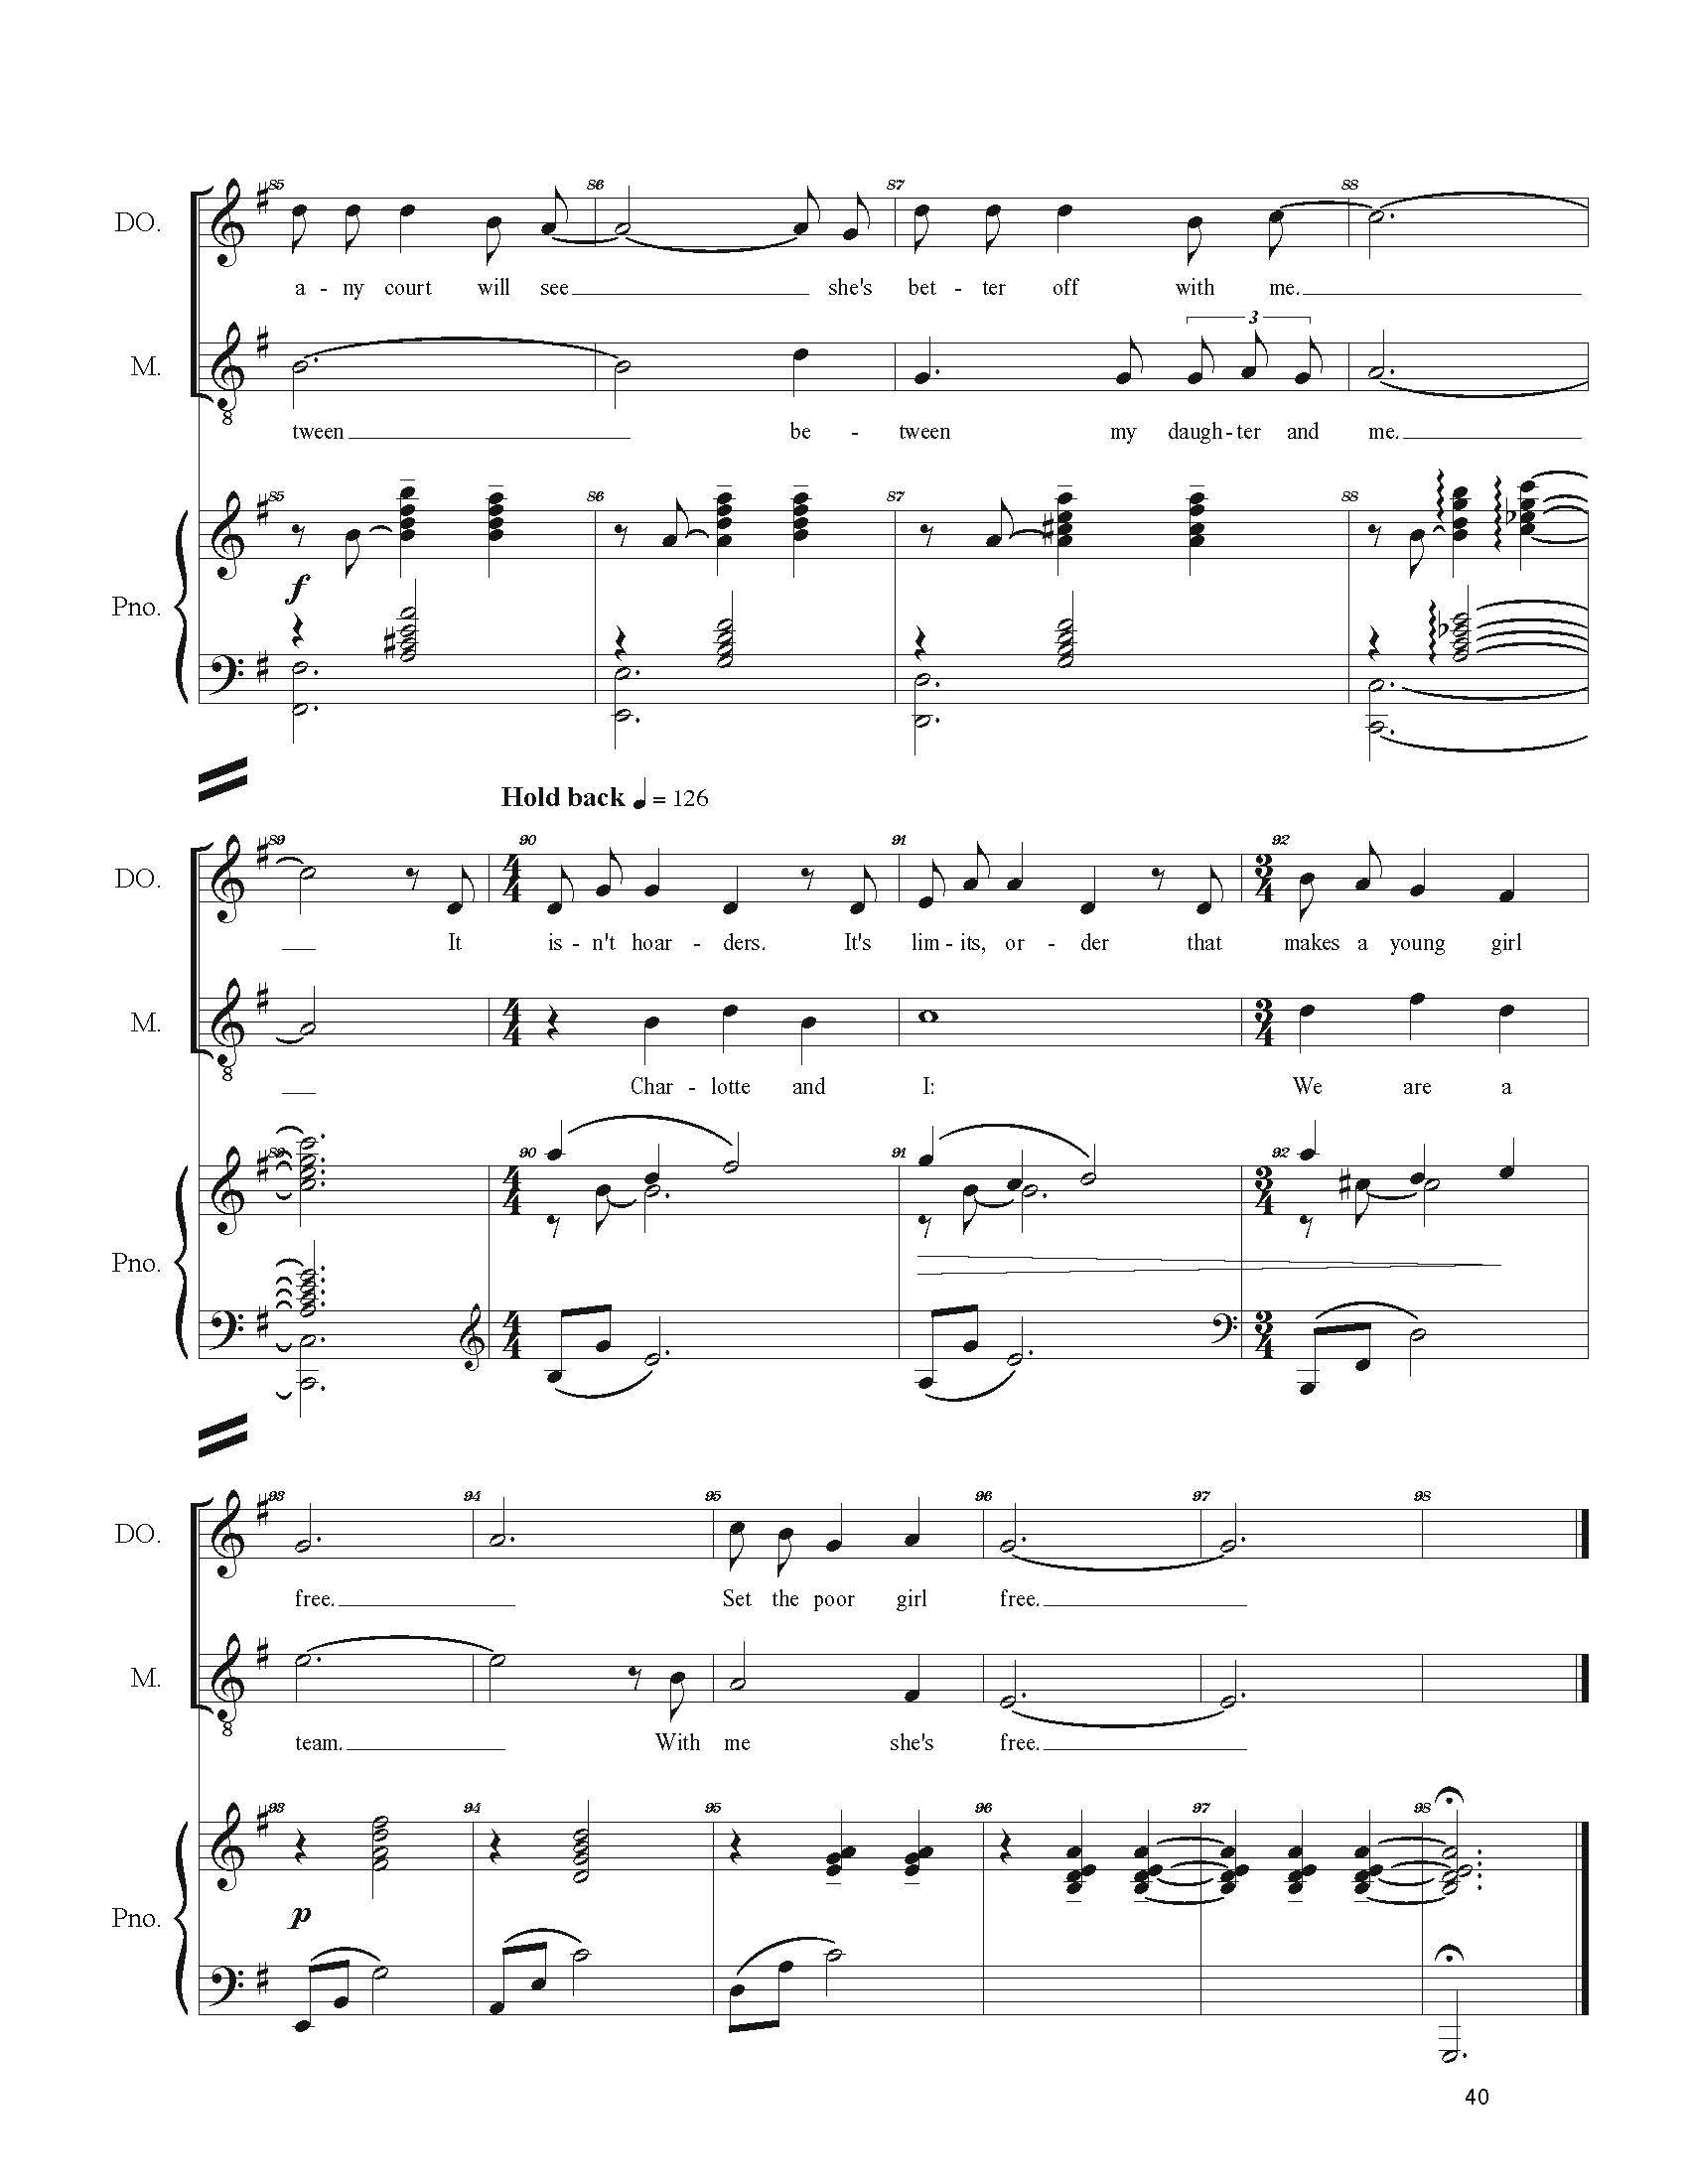 FULL PIANO VOCAL SCORE DRAFT 1 - Score_Page_040.jpg